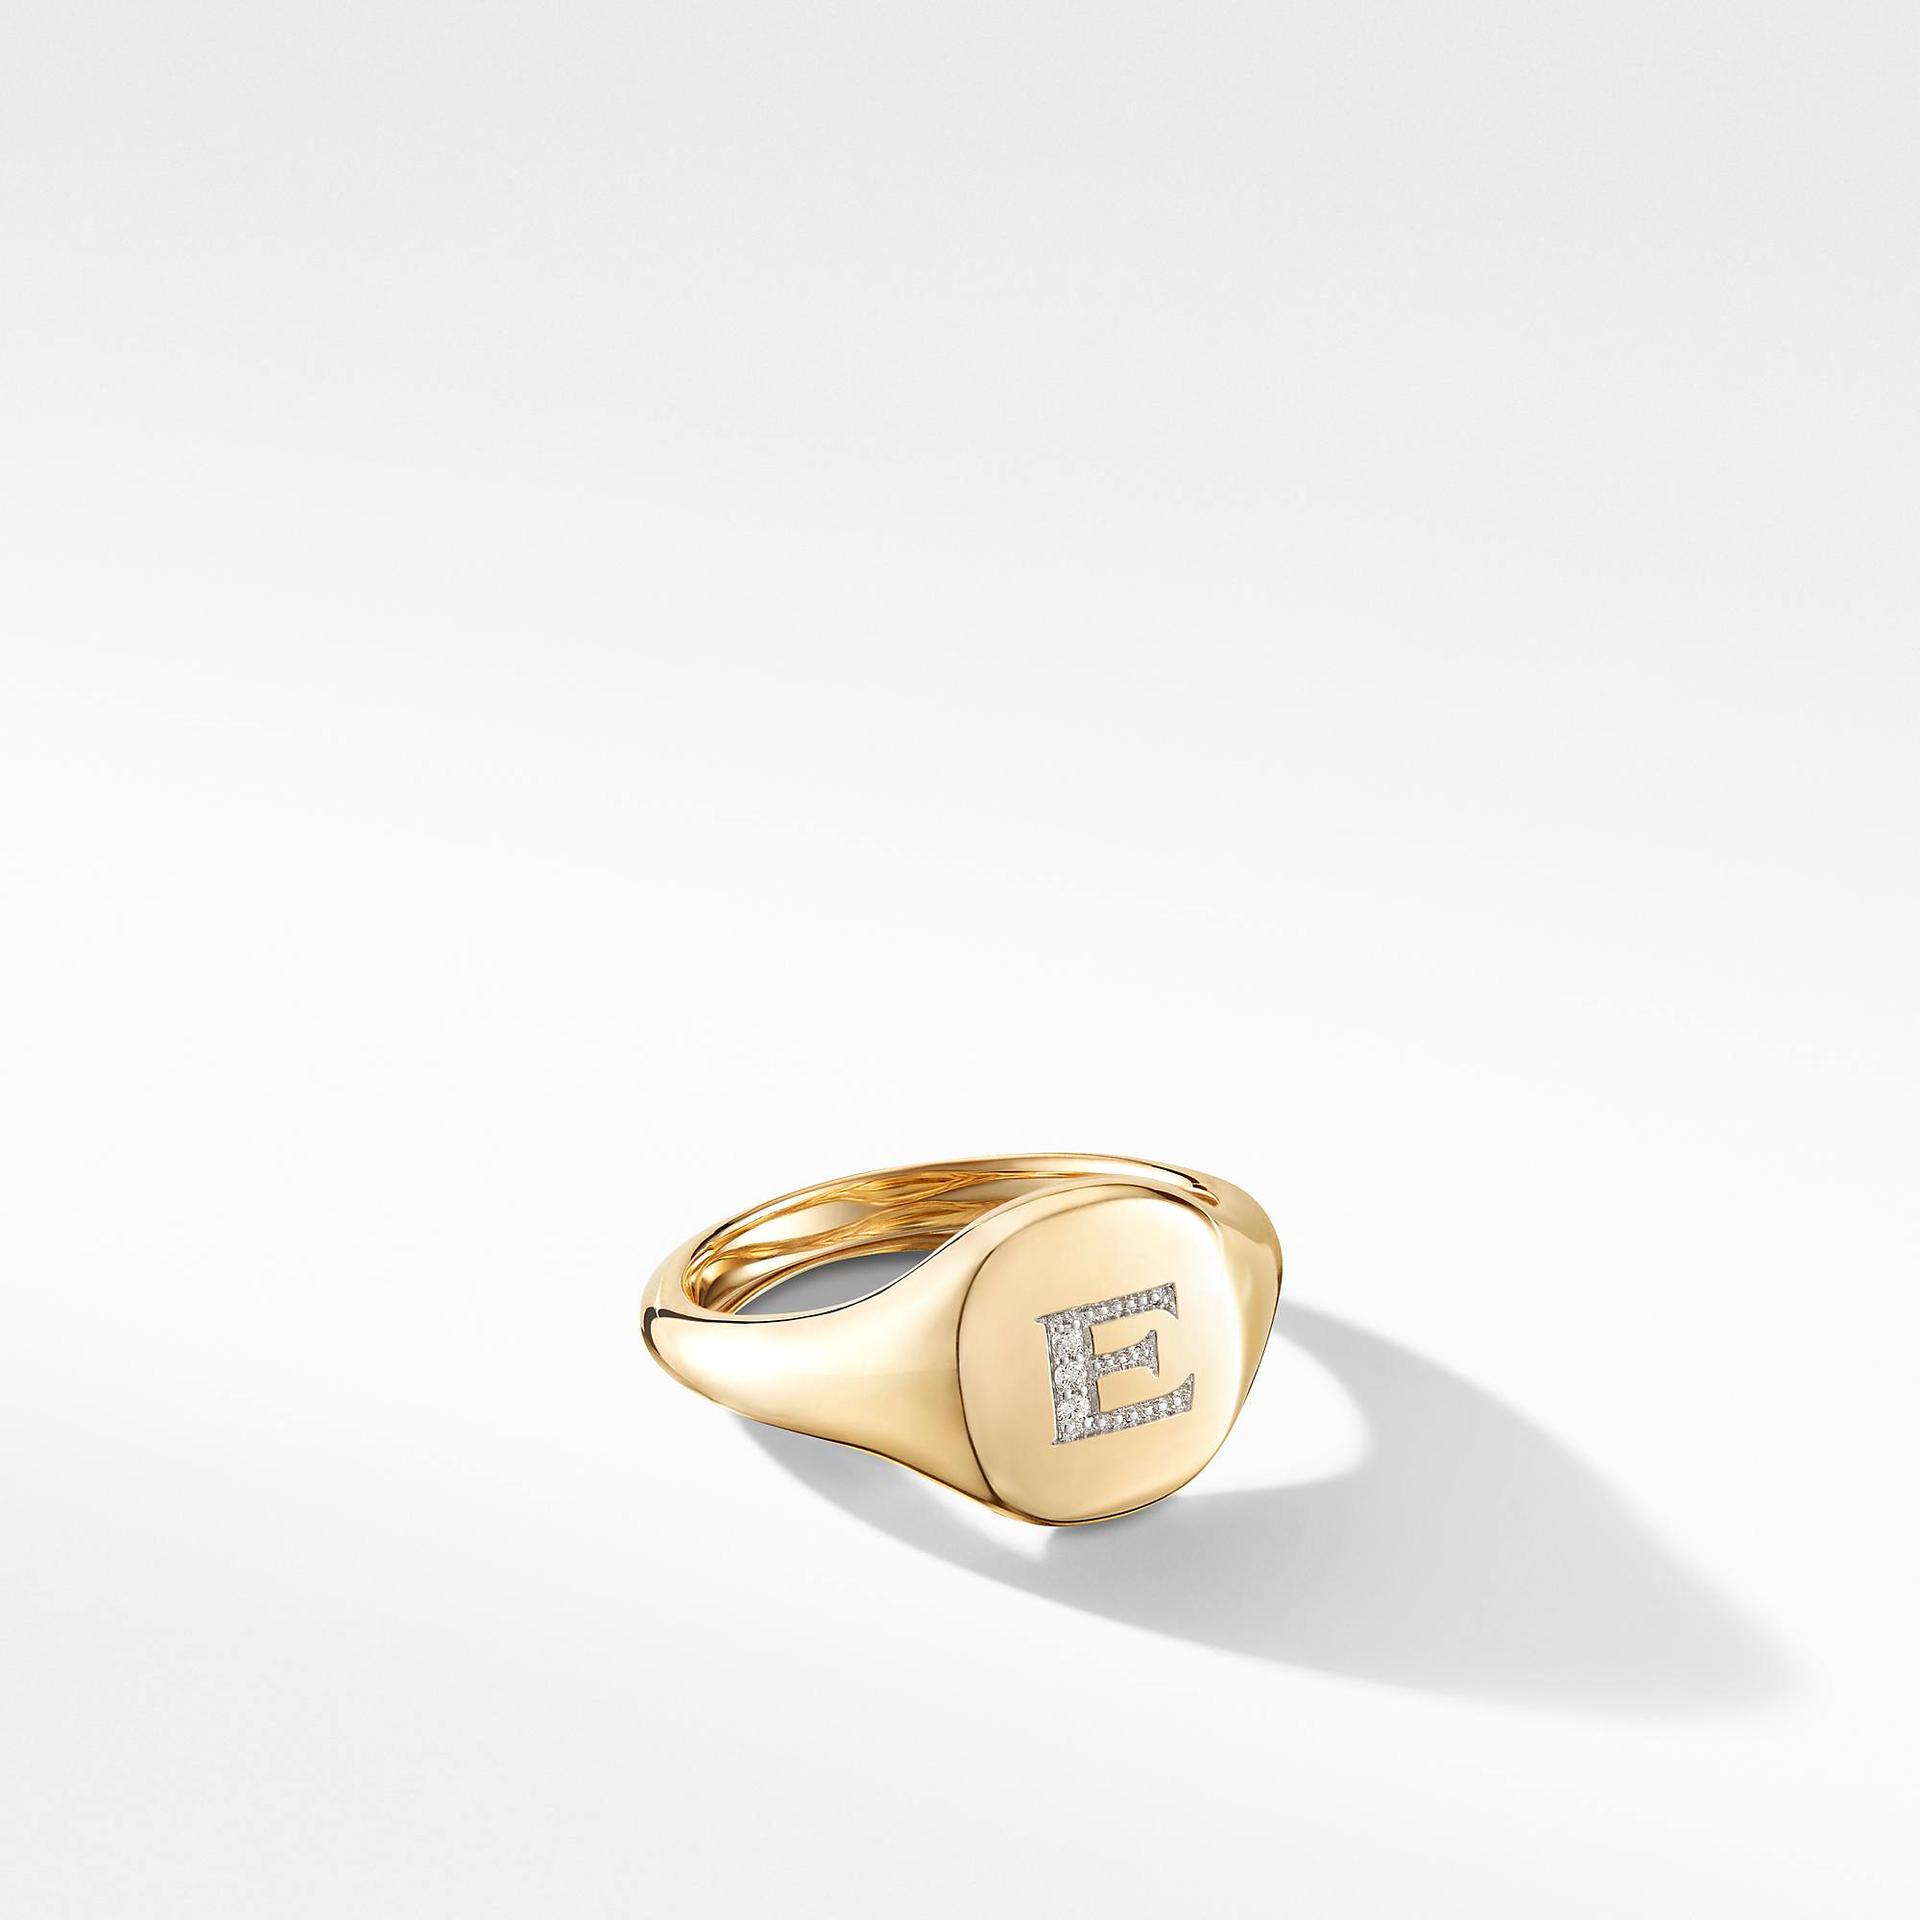 David Yurman Mini DY "E" initial Pinky Ring in 18K Yellow Gold with Diamonds 0